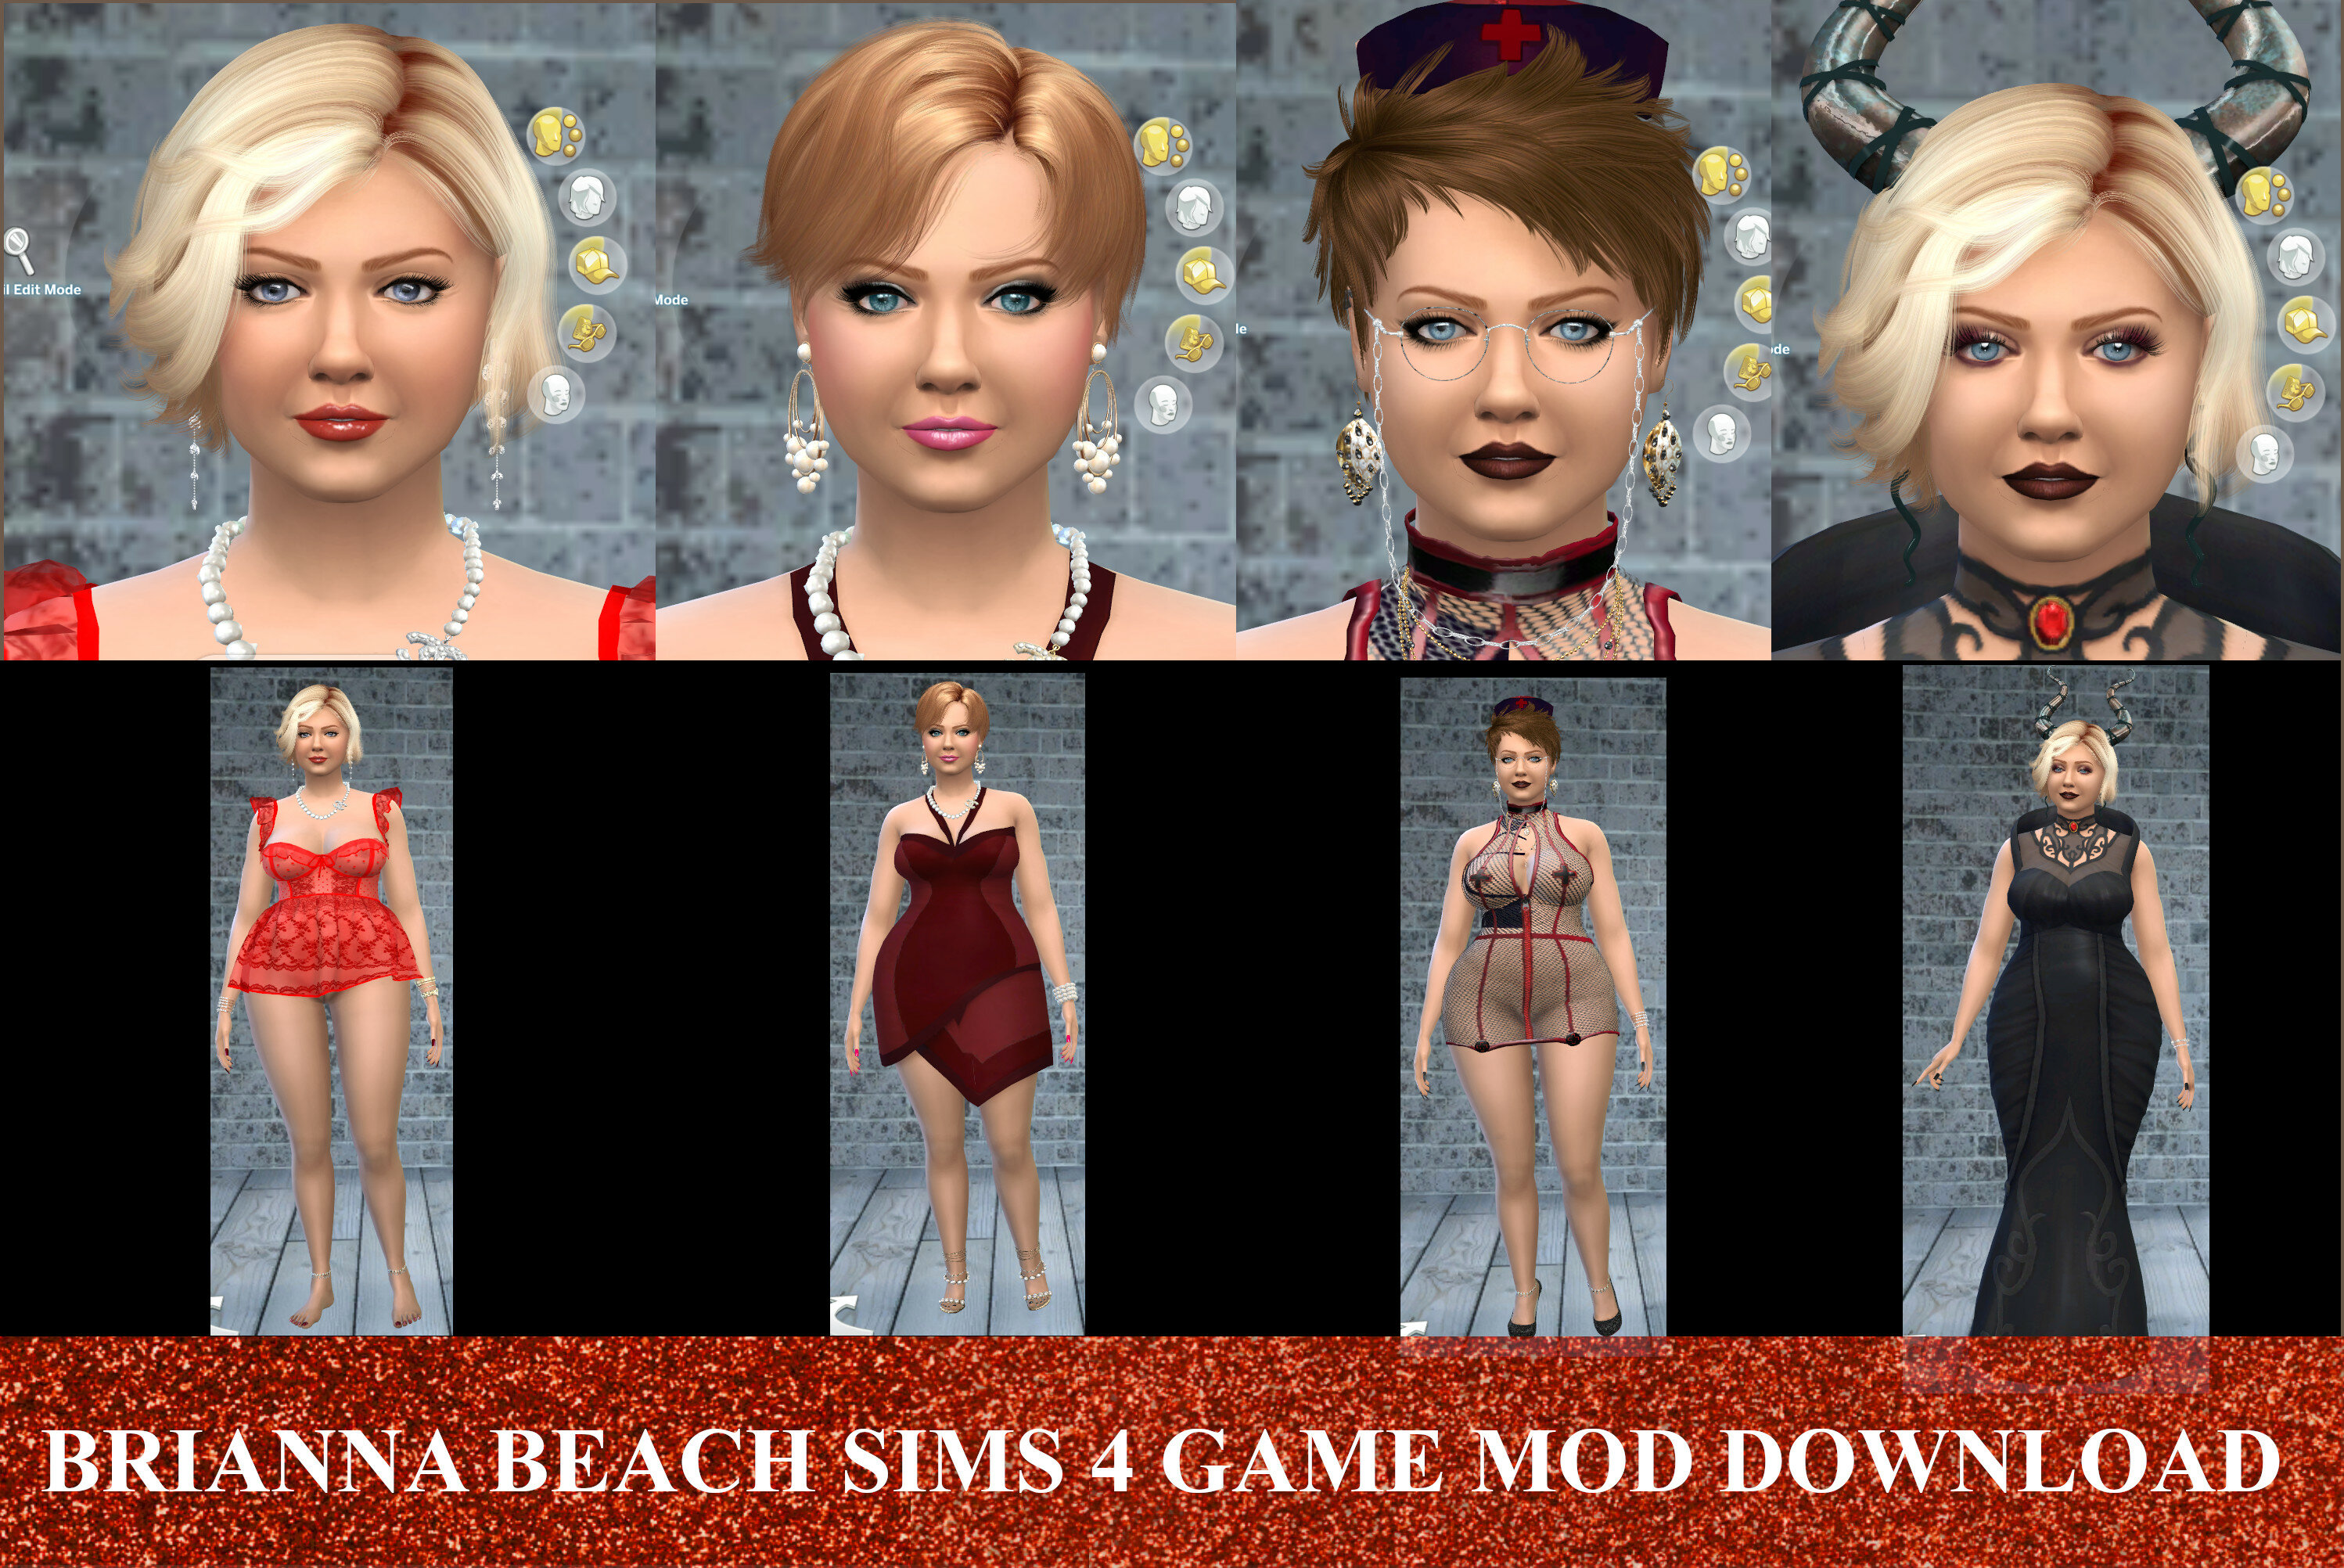 Pornstar Sims Mods Casca Akashova Downloads The Sims 4 Loverslab